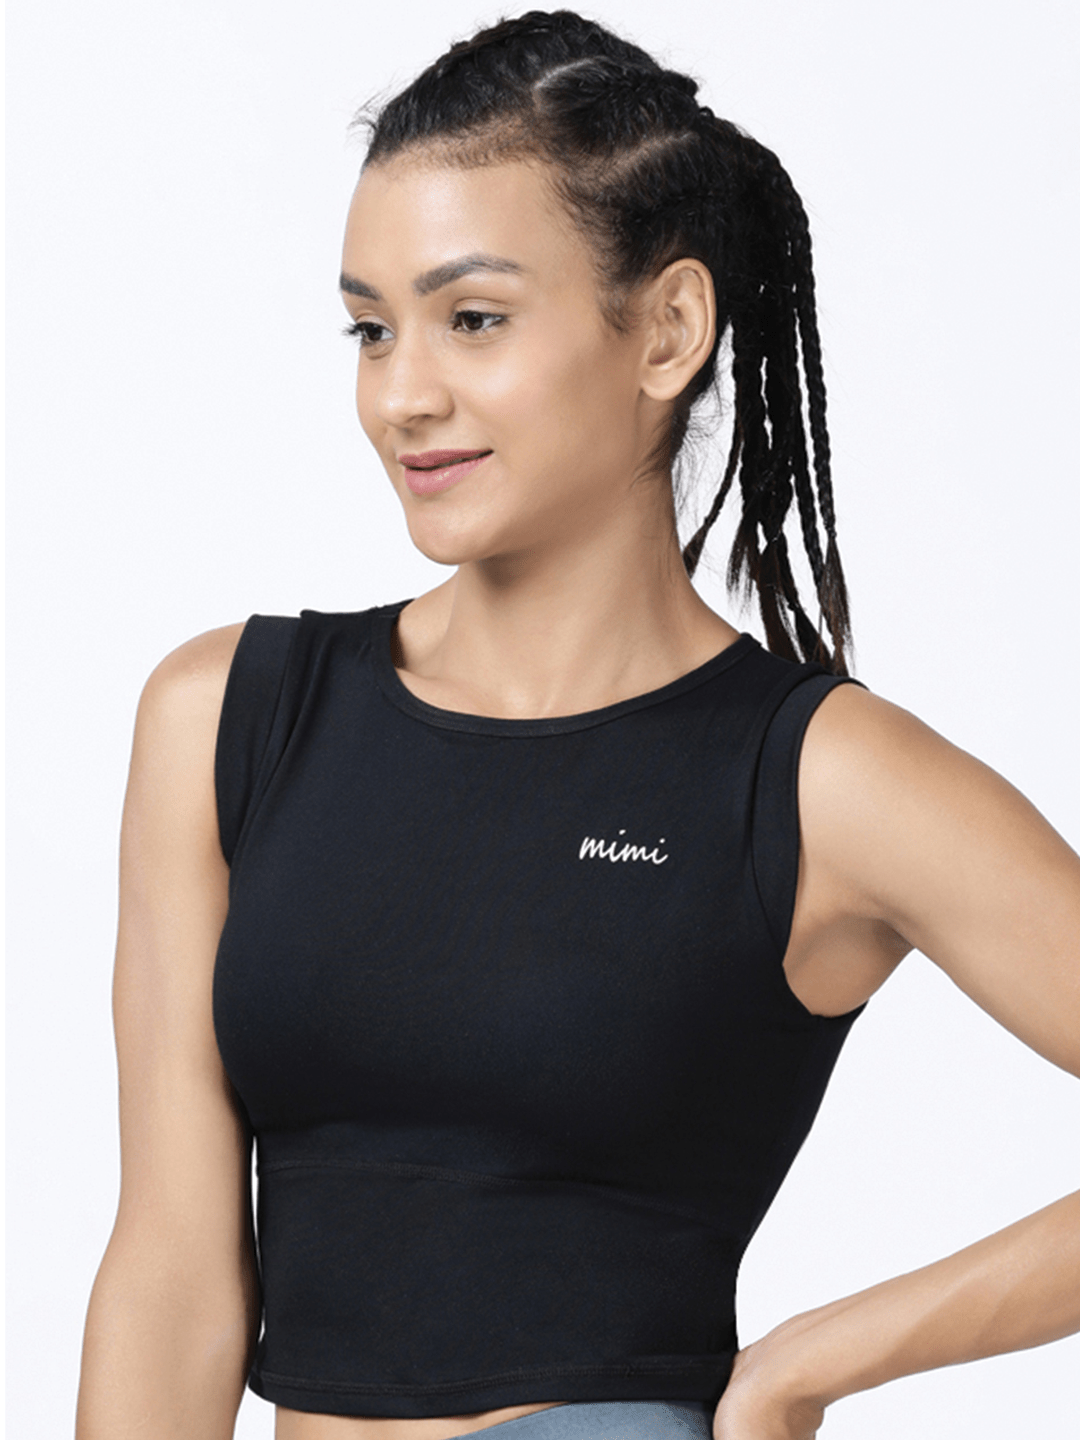 Mimi by Michelle Salins High Impact Full Coverage Nylon Sports Bra For Women - Black